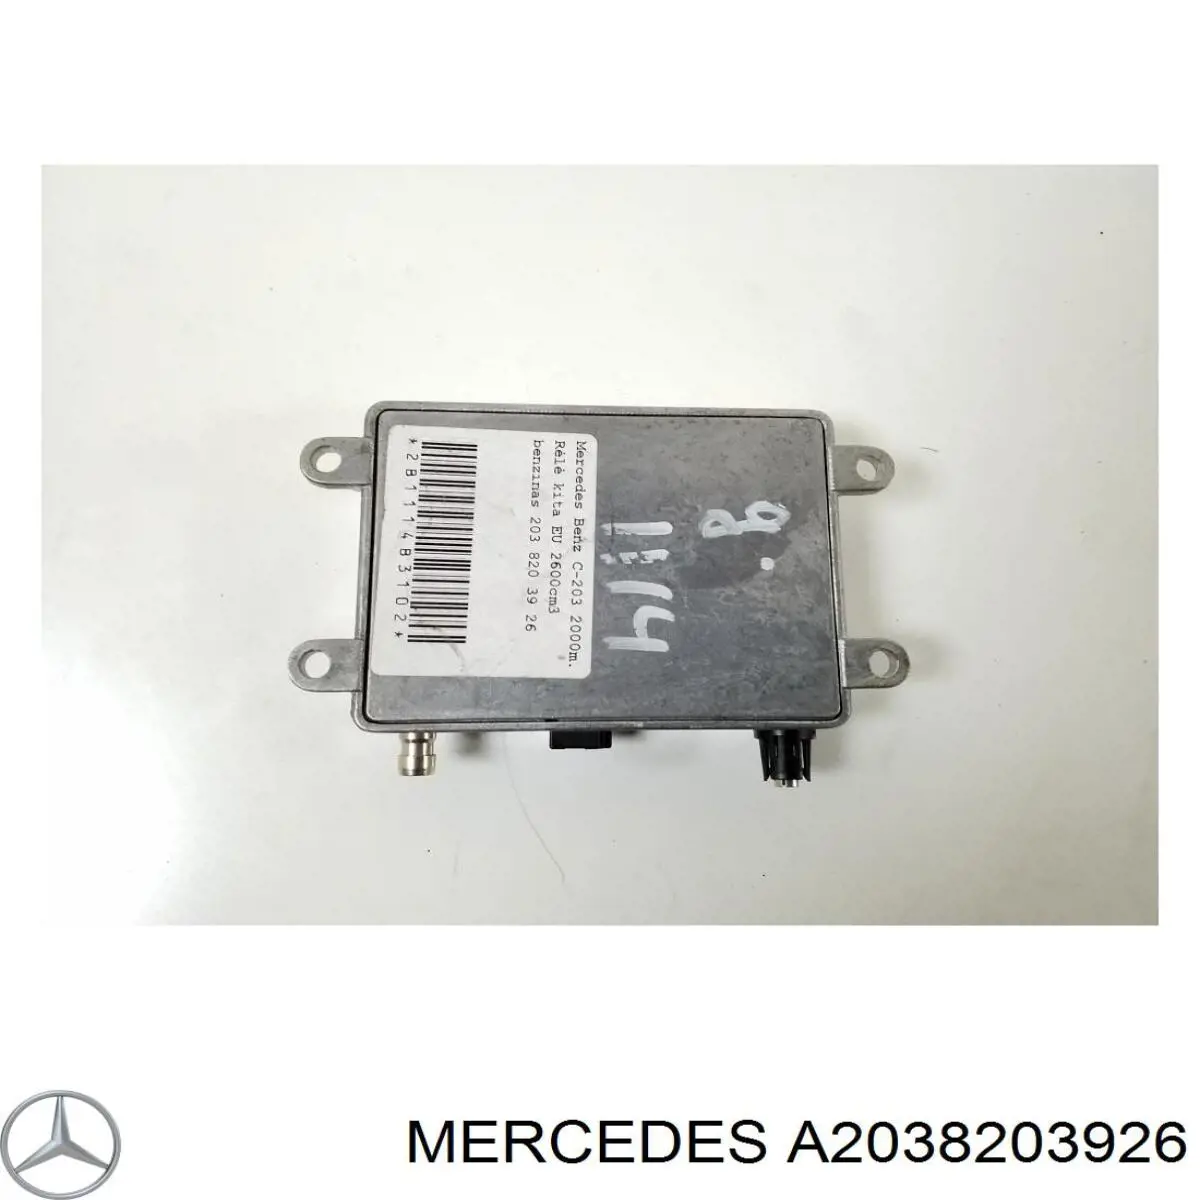 A2038203926 Mercedes unidad de control del teléfono